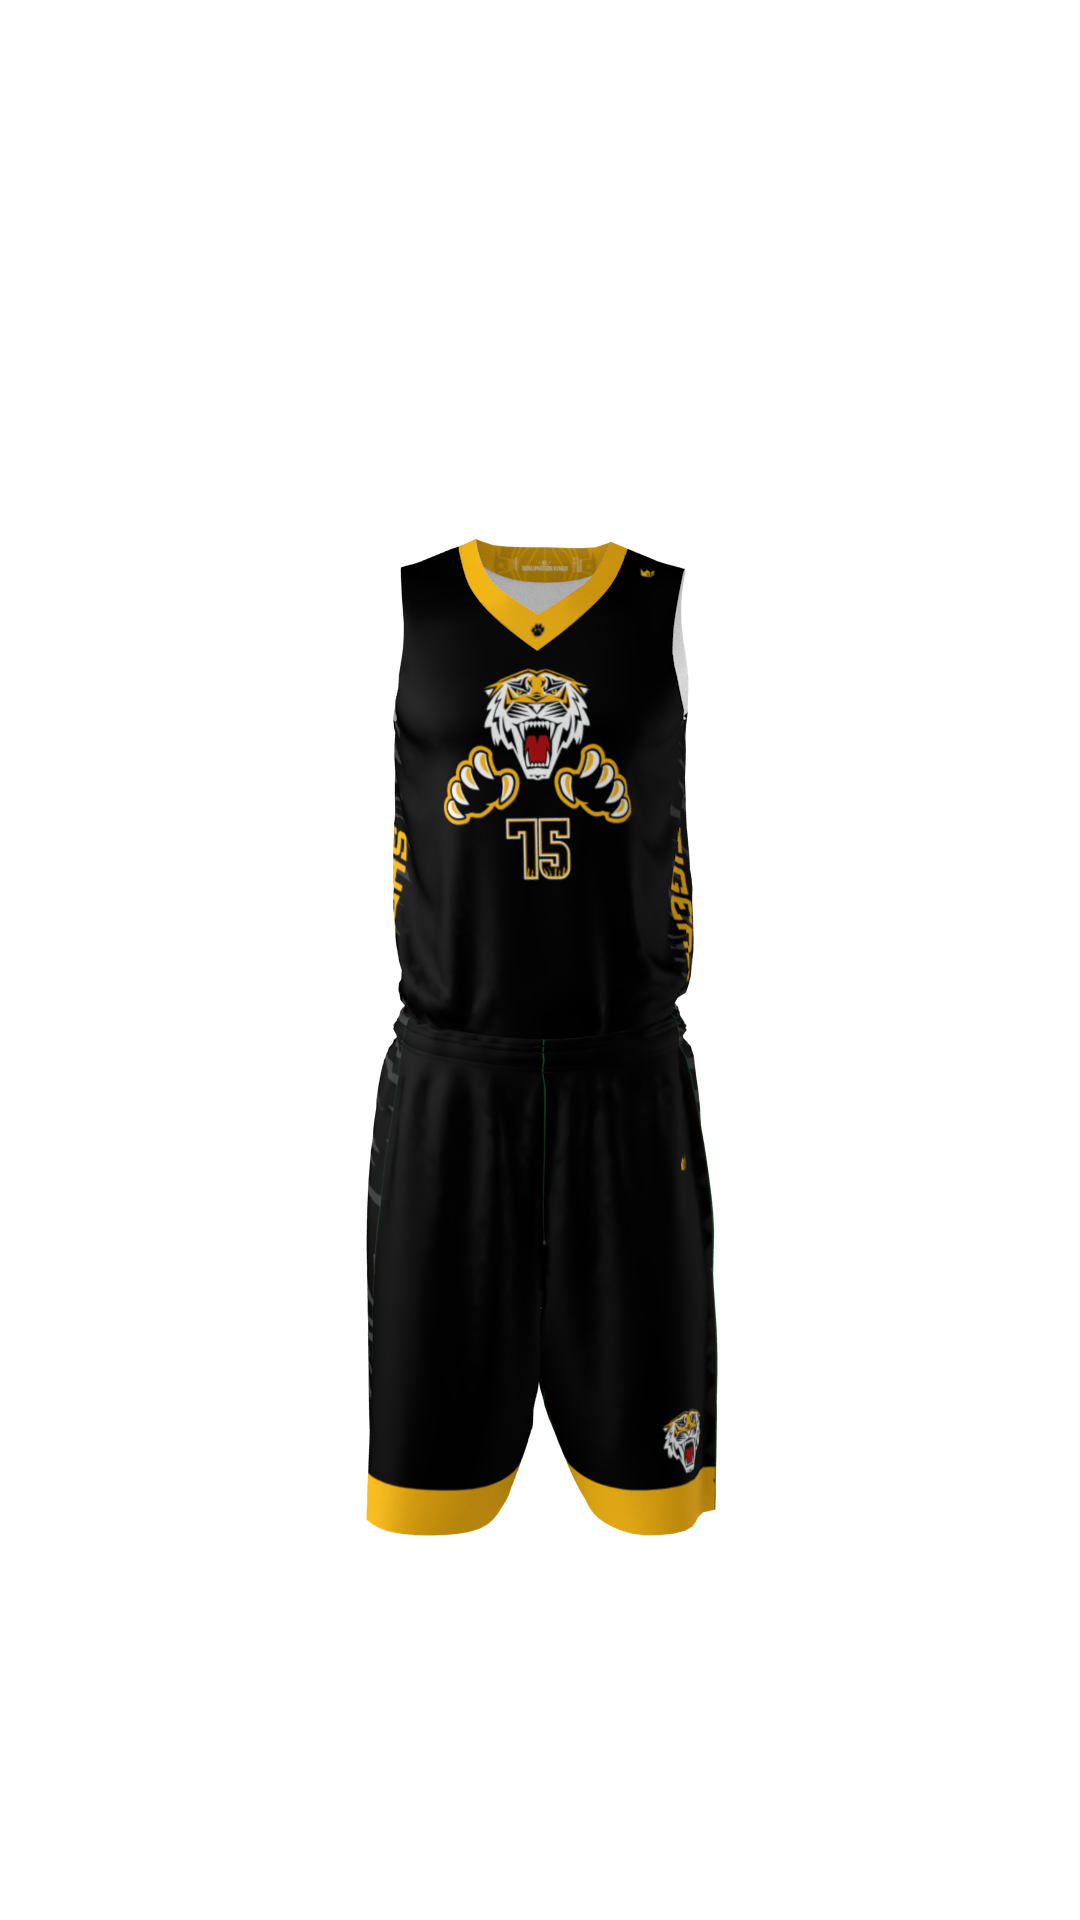 tigers basketball jersey